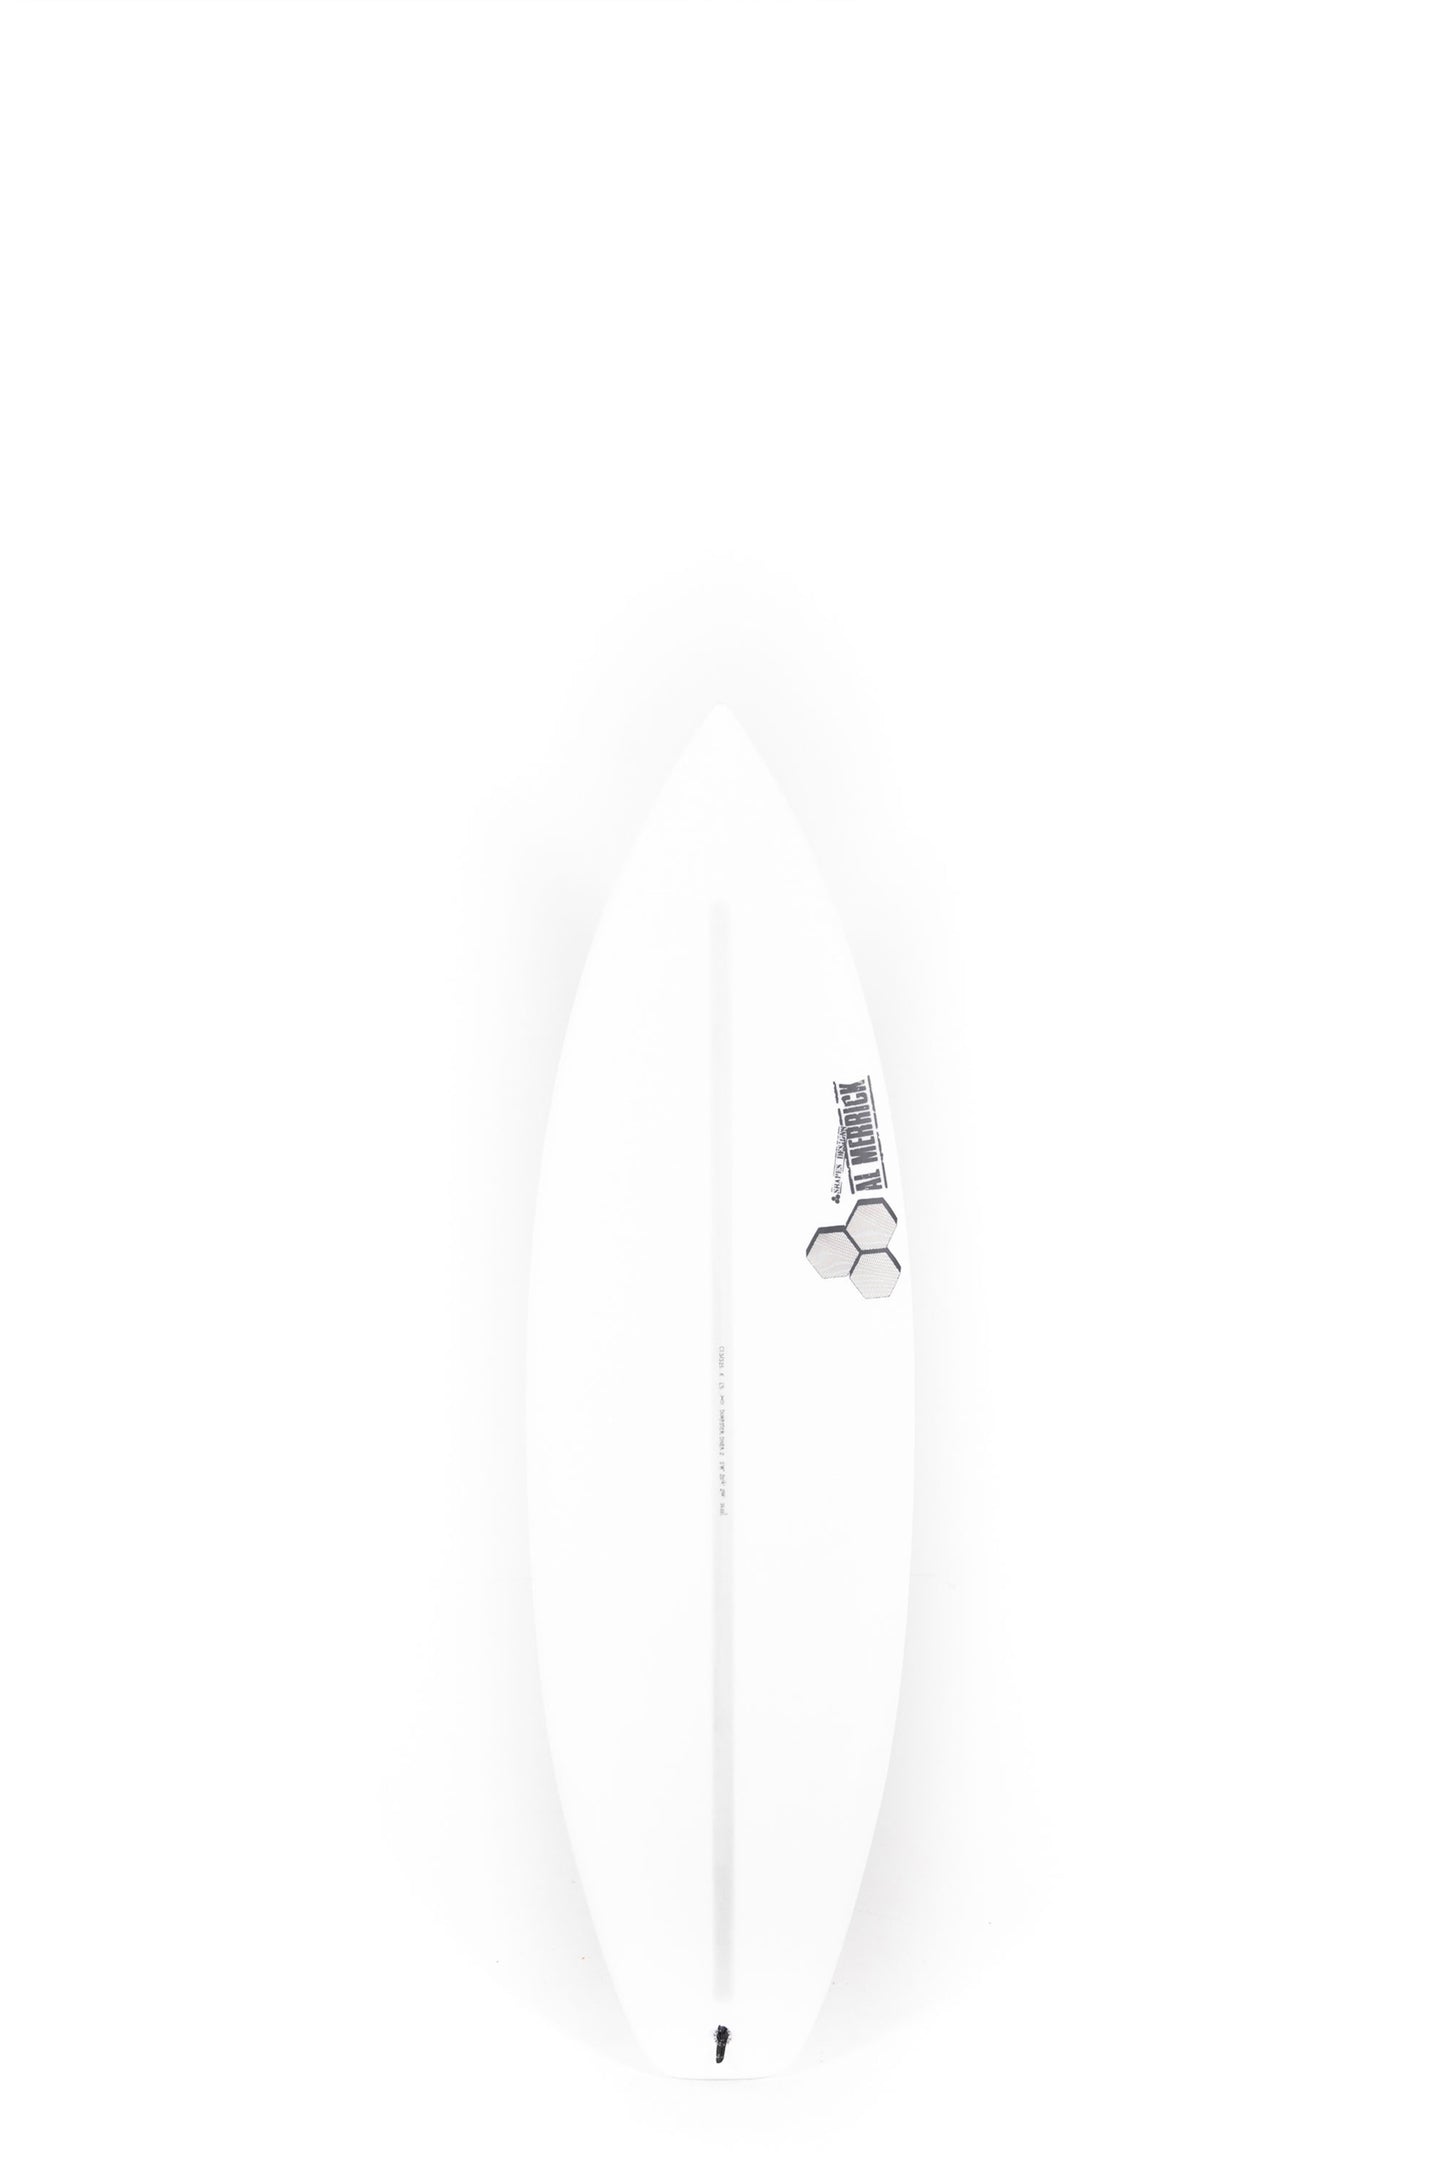 CHANNEL ISLANDS SURFBOARDS | Shop at PUKAS SURF SHOP